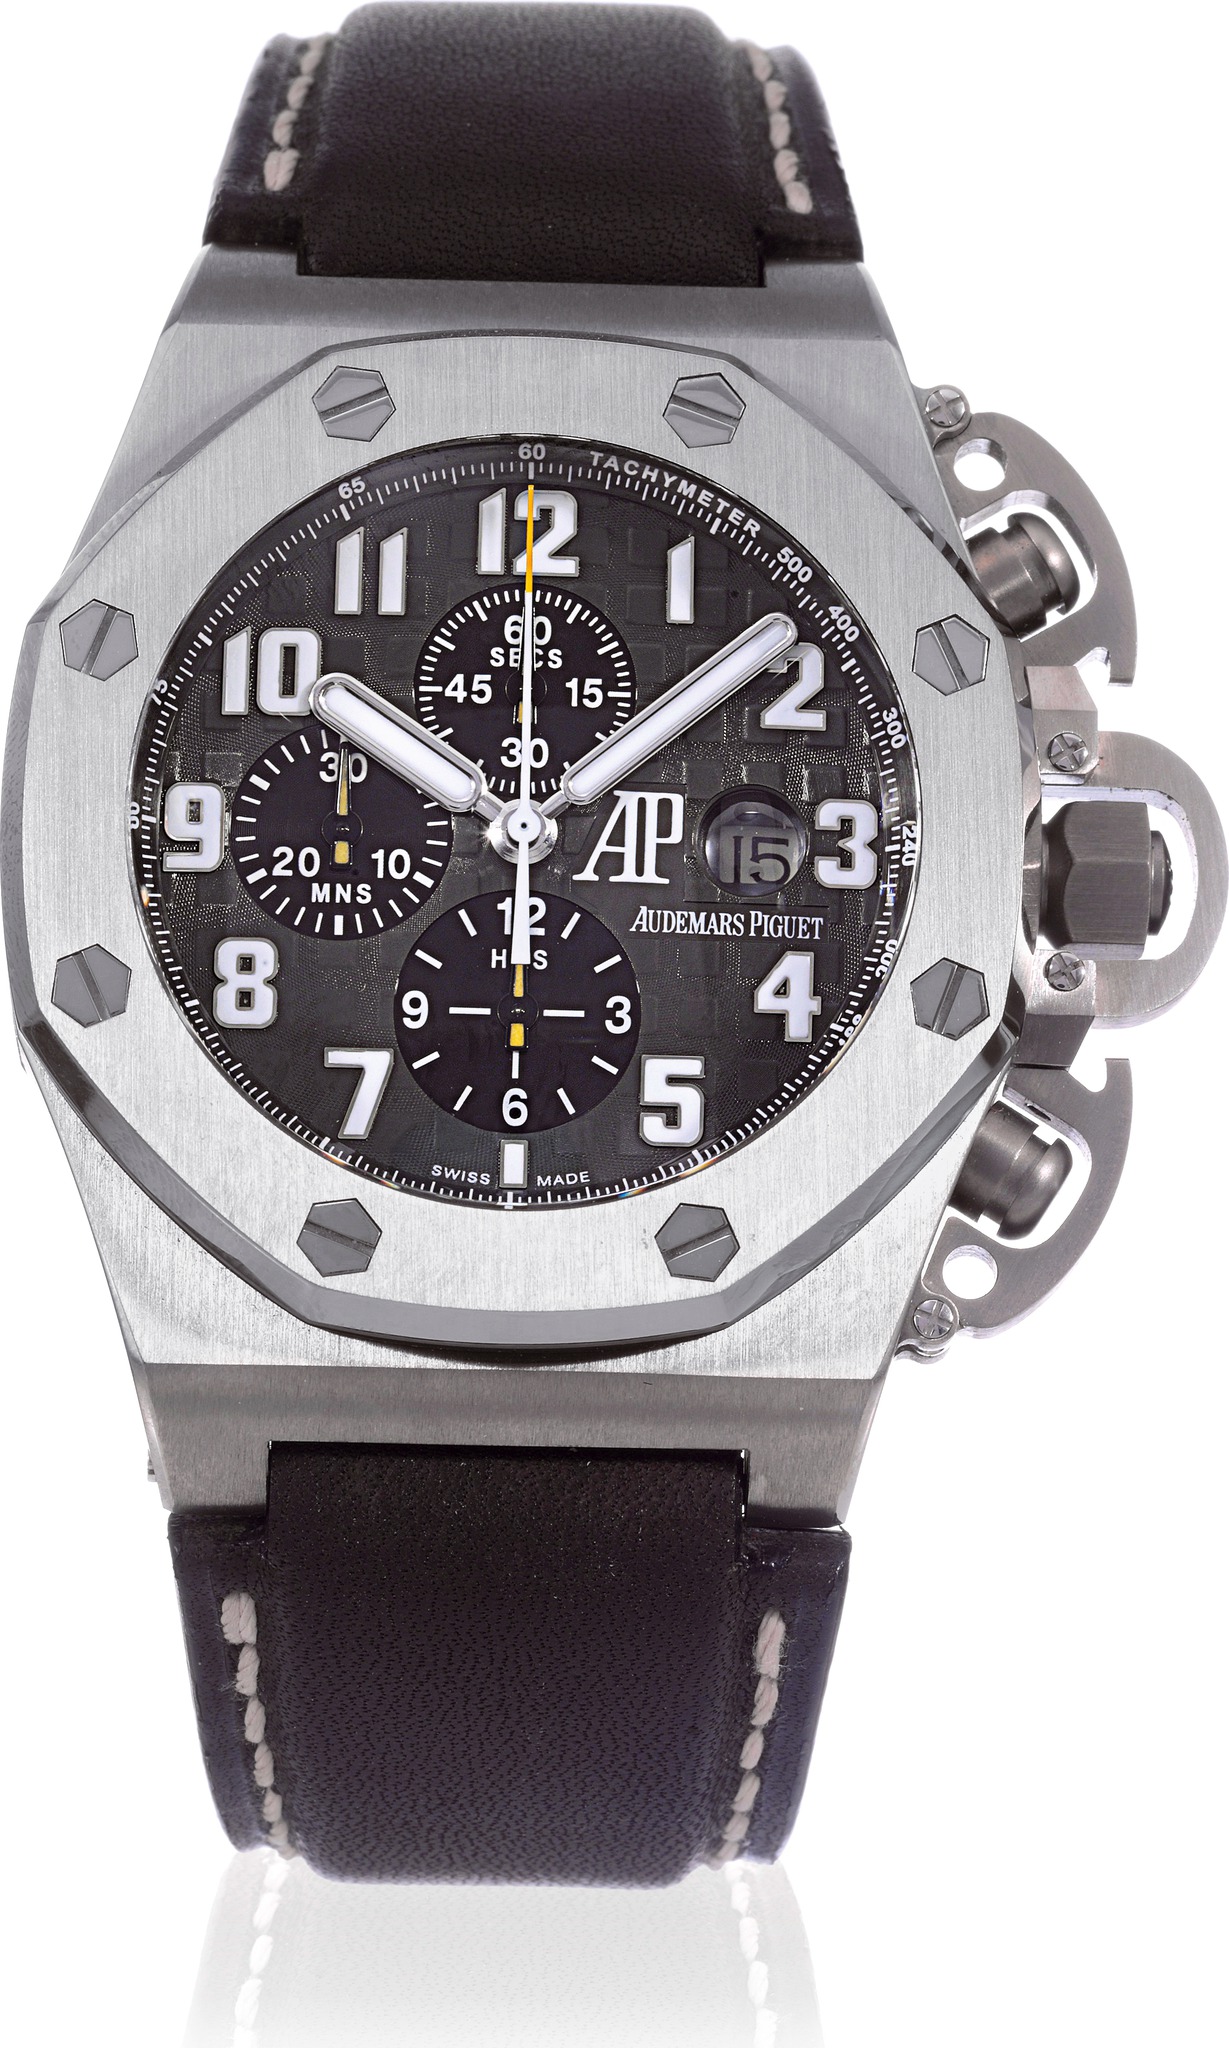 Audemars Piguet Royal Oak Offshore T3 Charcoal Grey Titanium watch REF: 25863TI.OO.A001CU.01